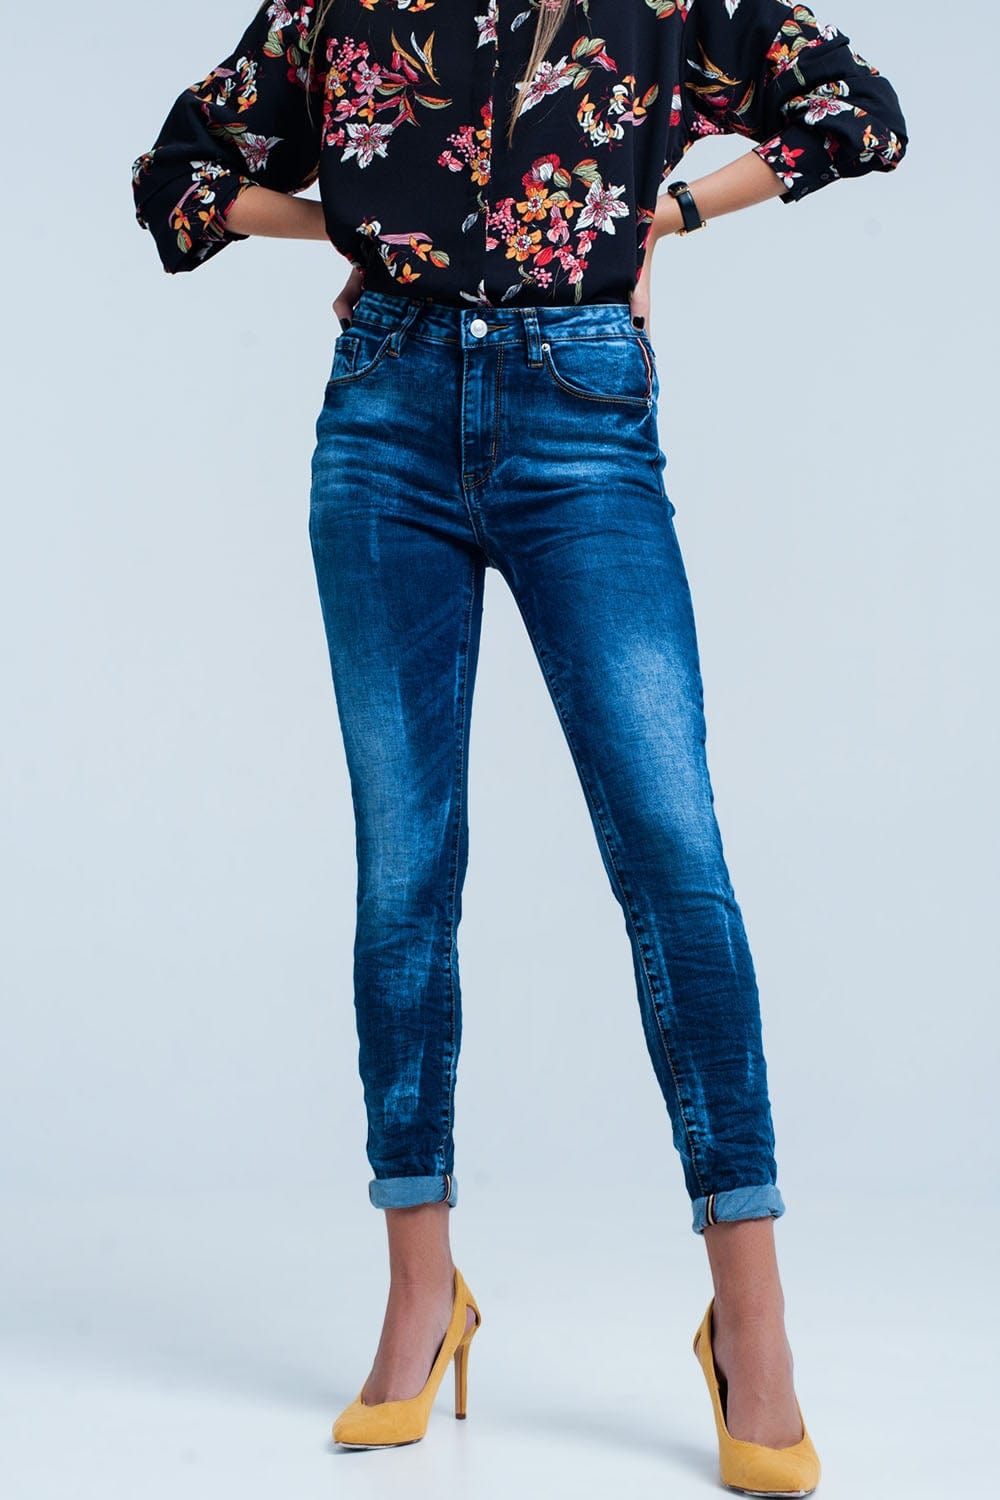 Q2 Women's Jean Blue wrinkled high-waist skinny jeans